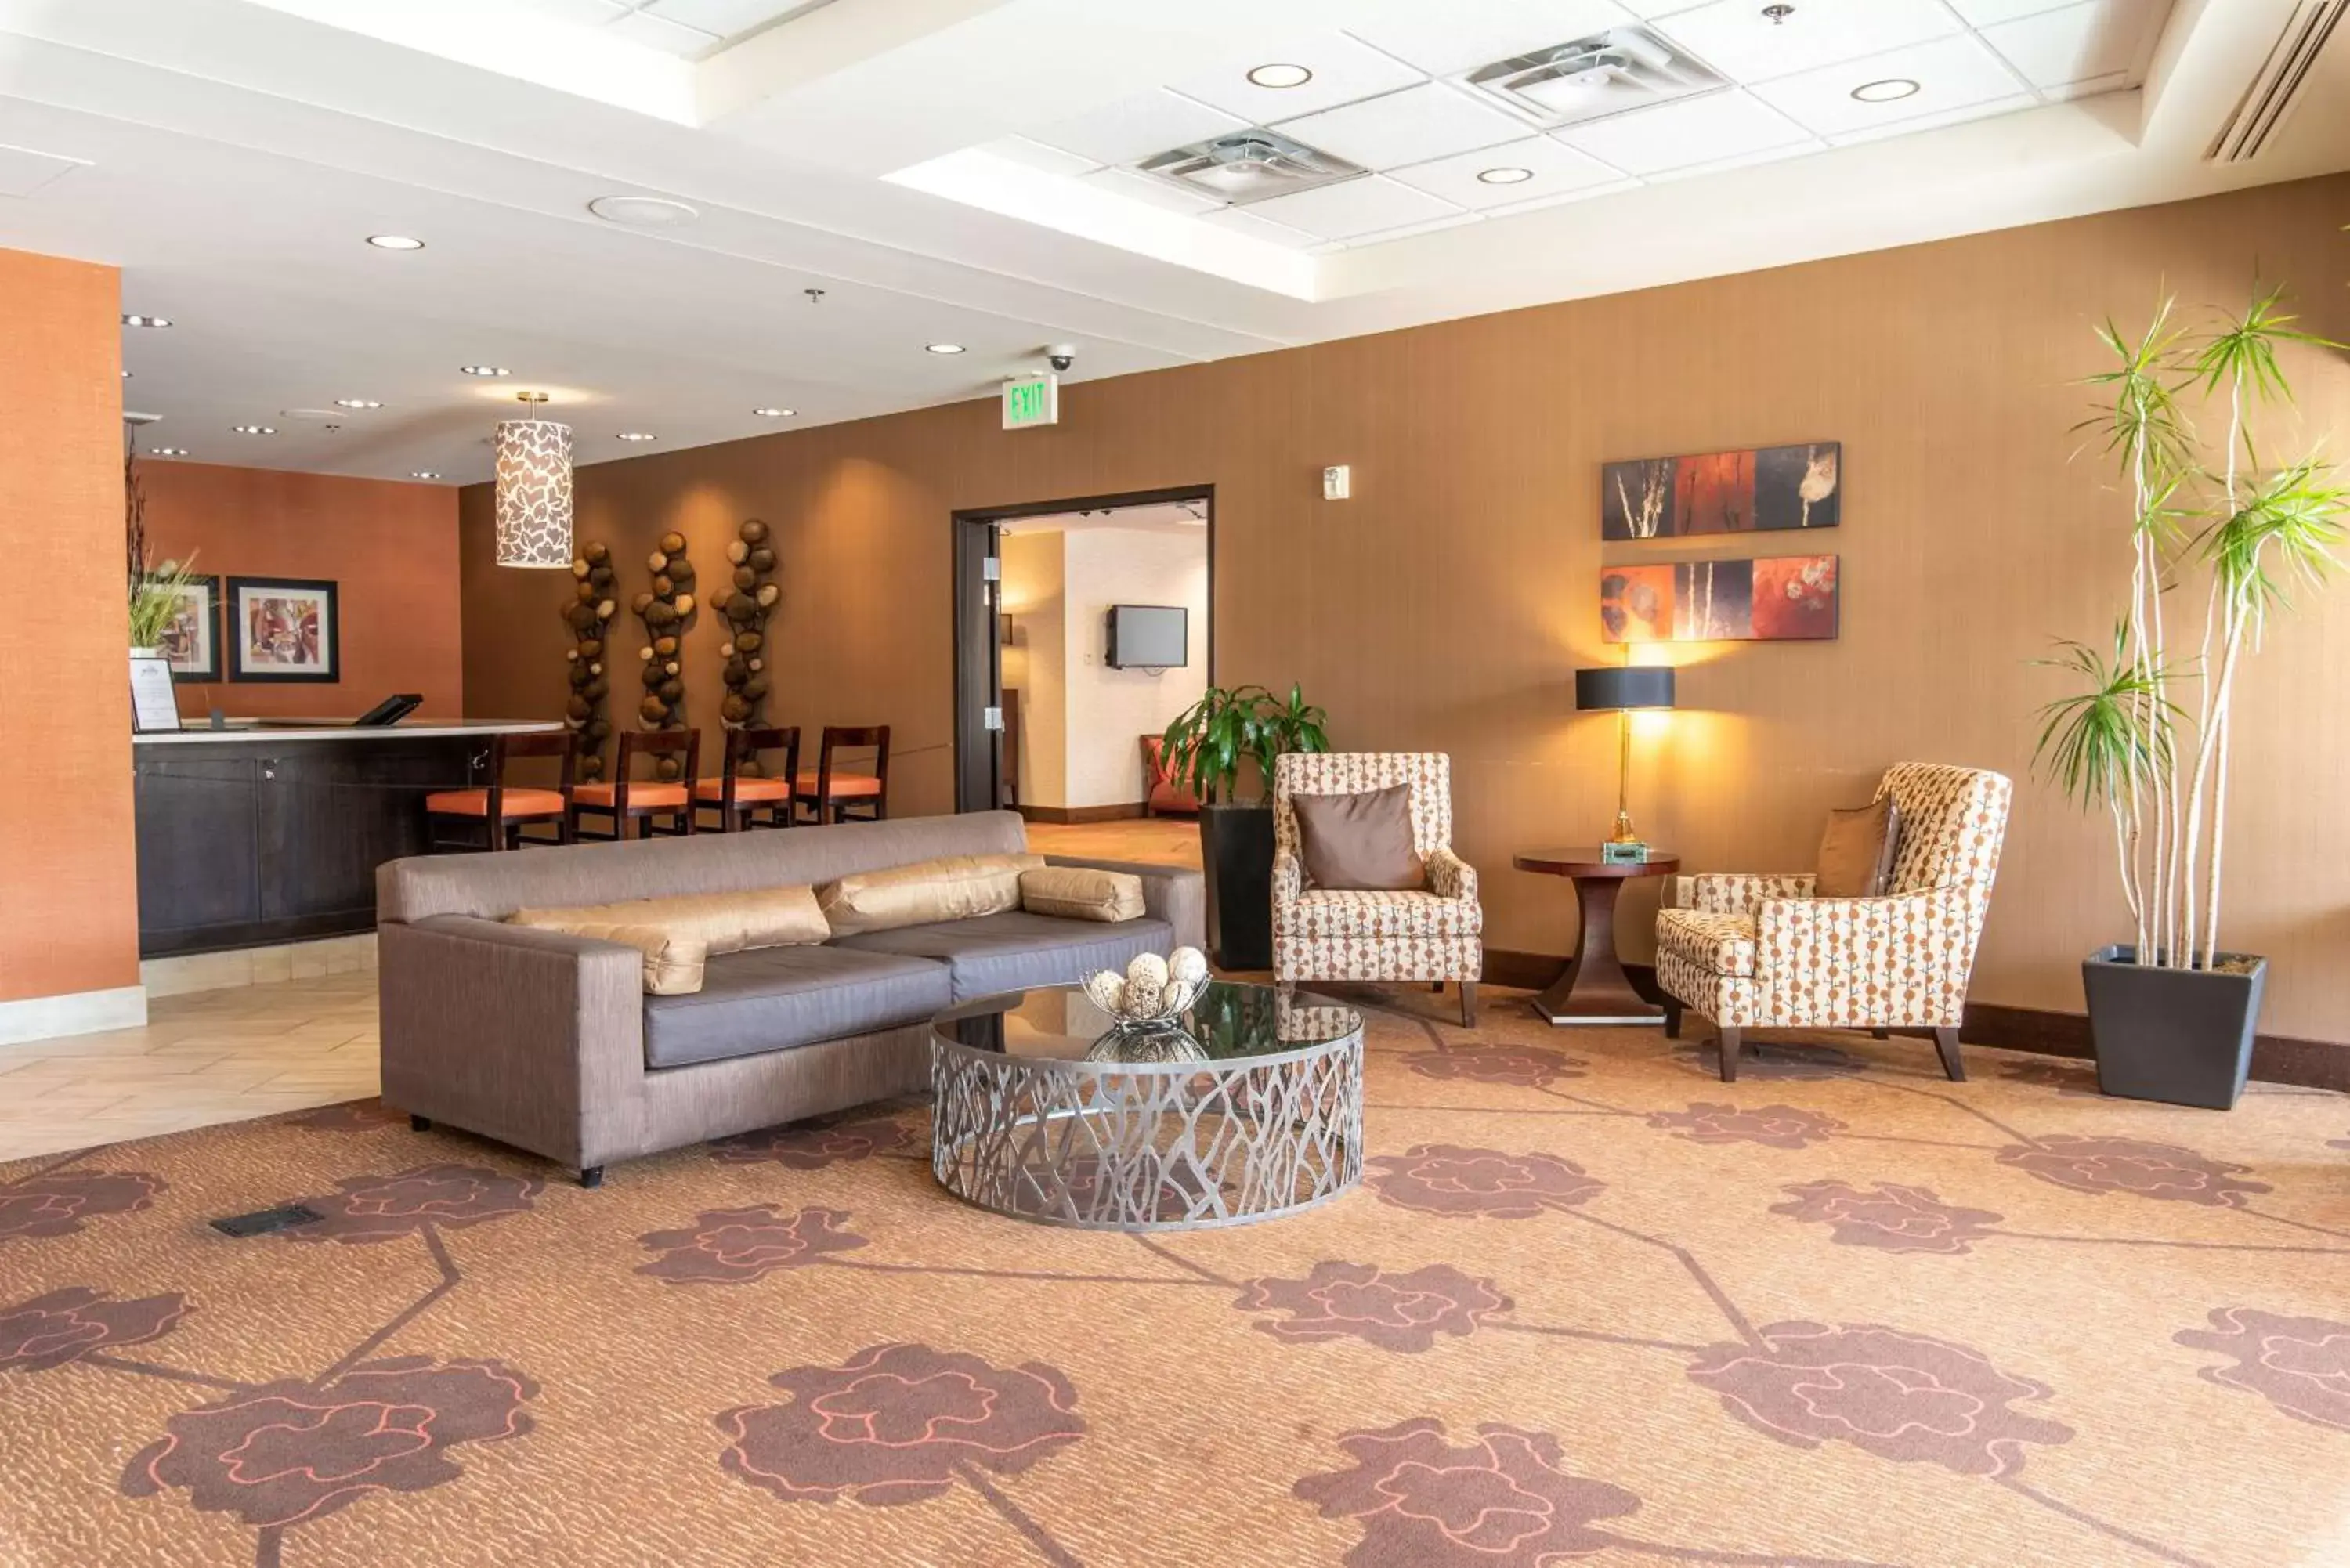 Lobby or reception, Lobby/Reception in Hilton Garden Inn Ogden